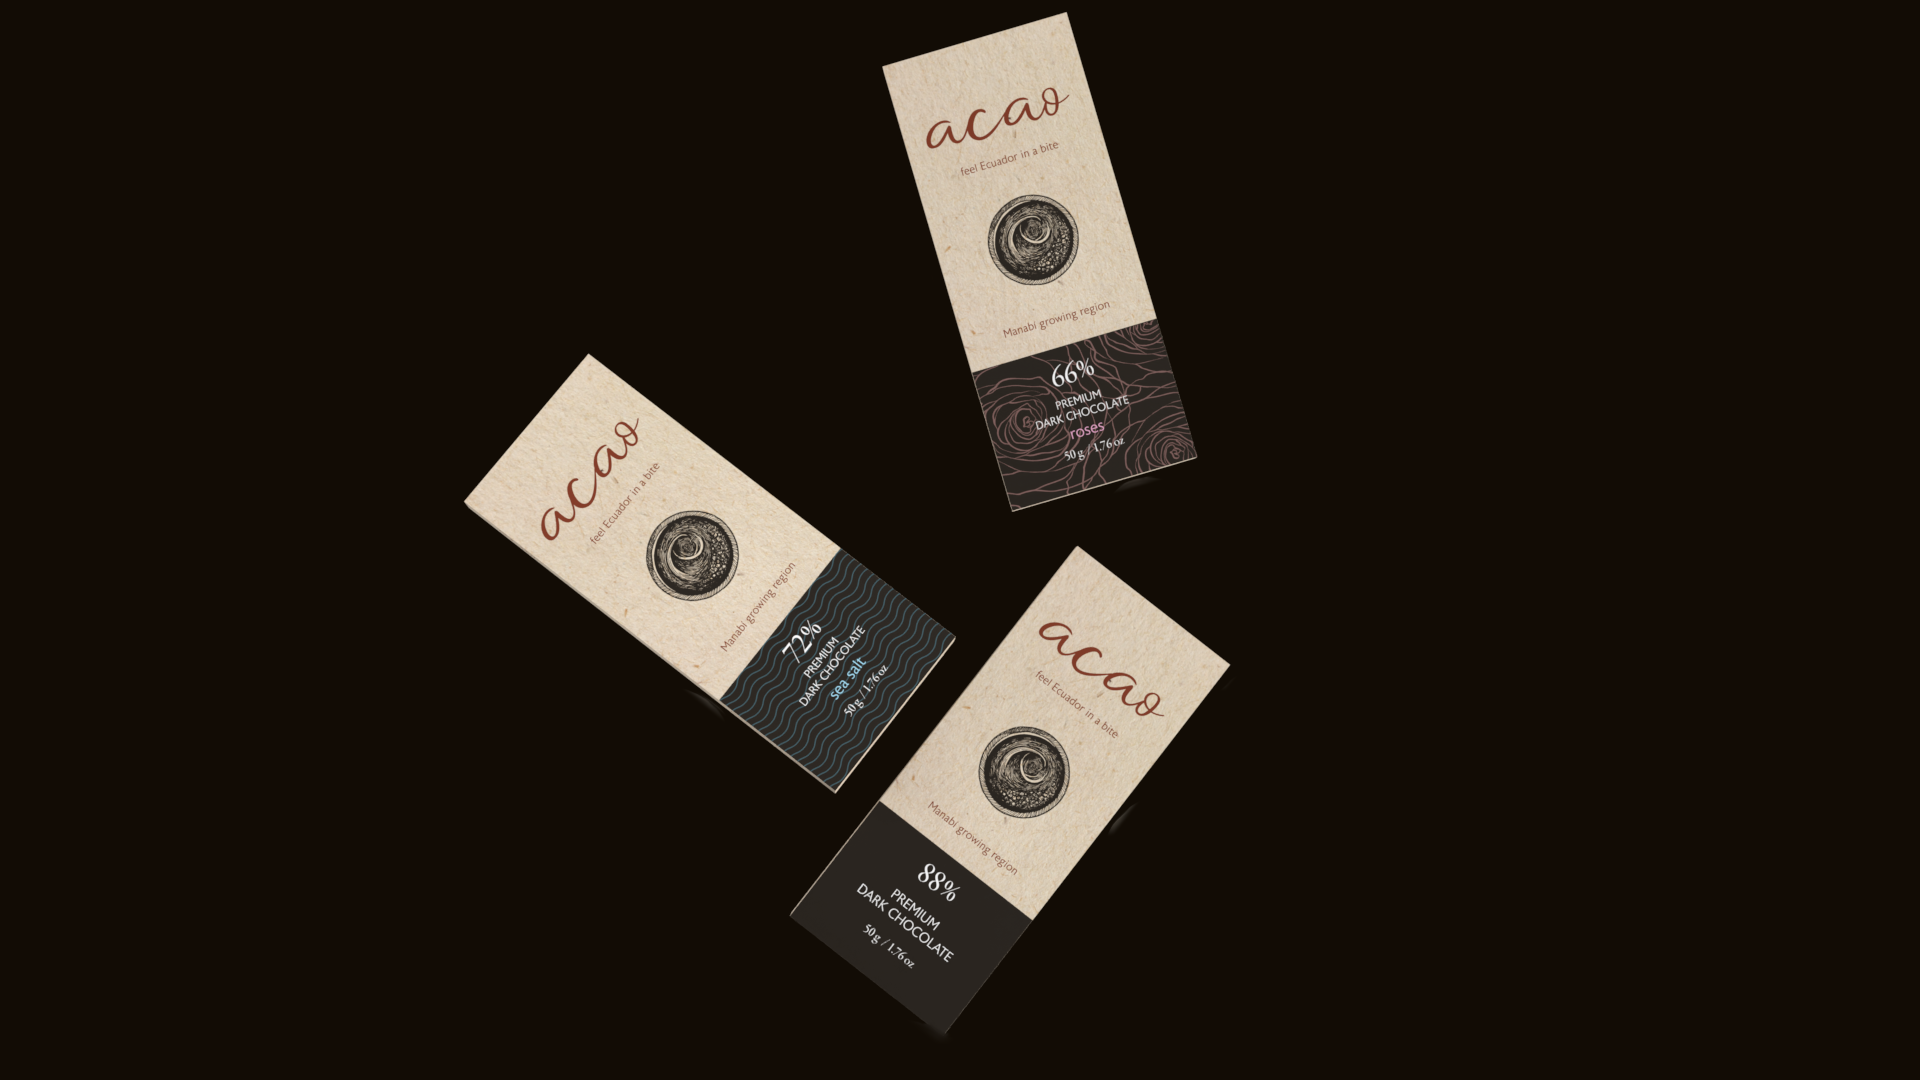 Diseño de packaging - Acao